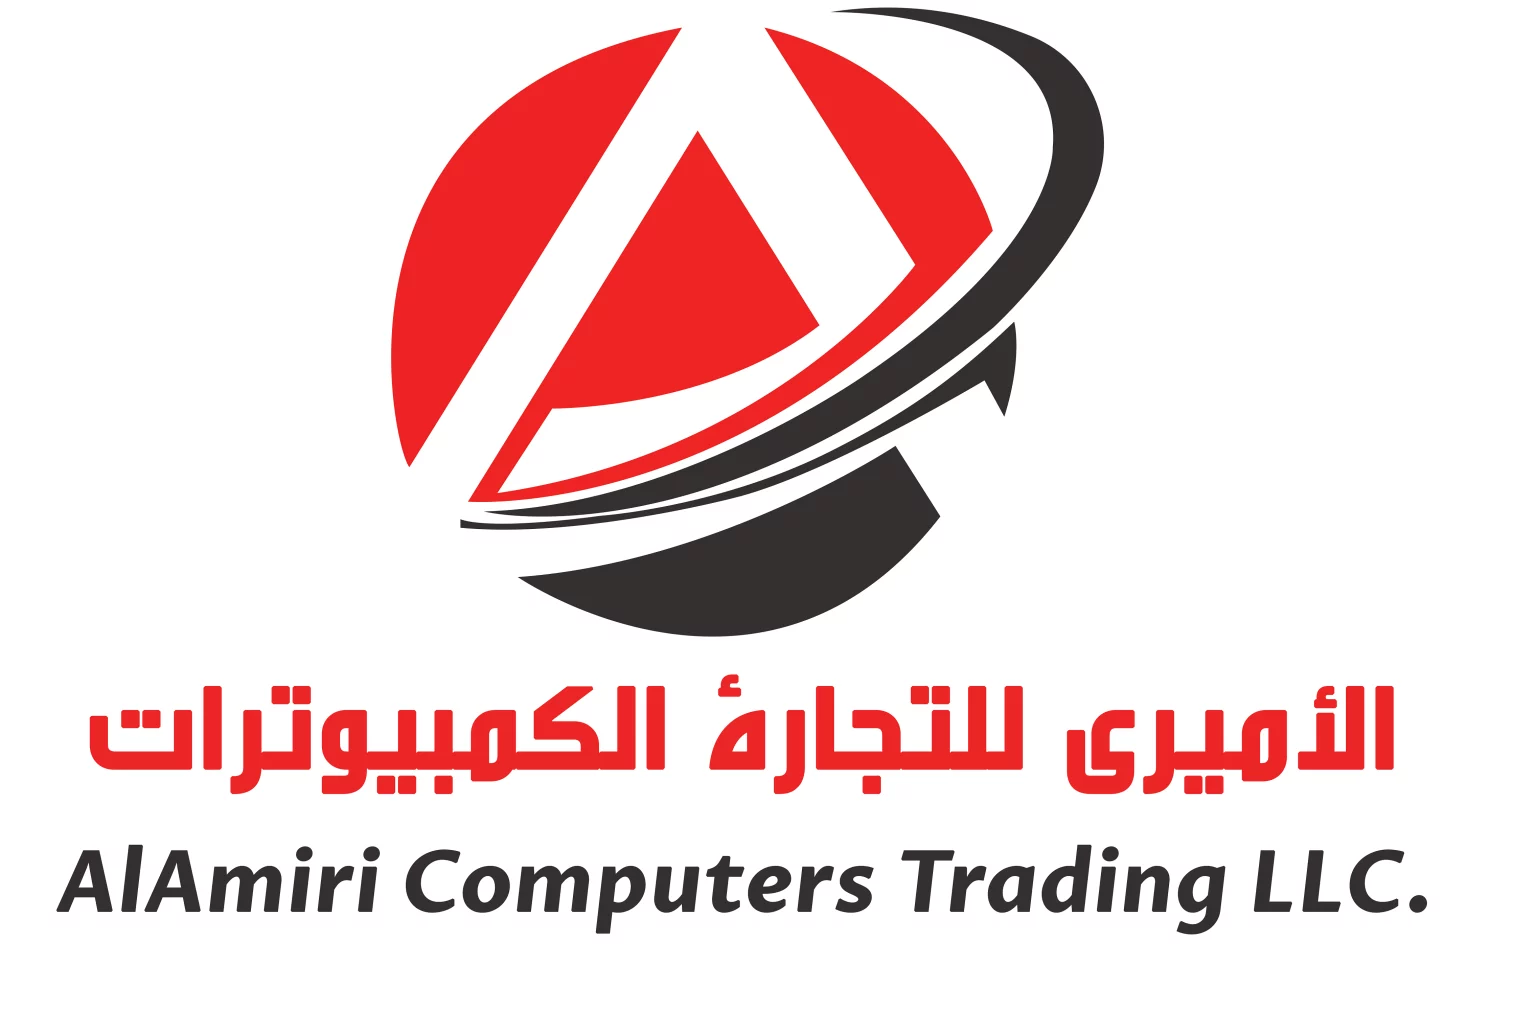 AlAmiri Computers Trading L.L.C Software Distributor and Reseller